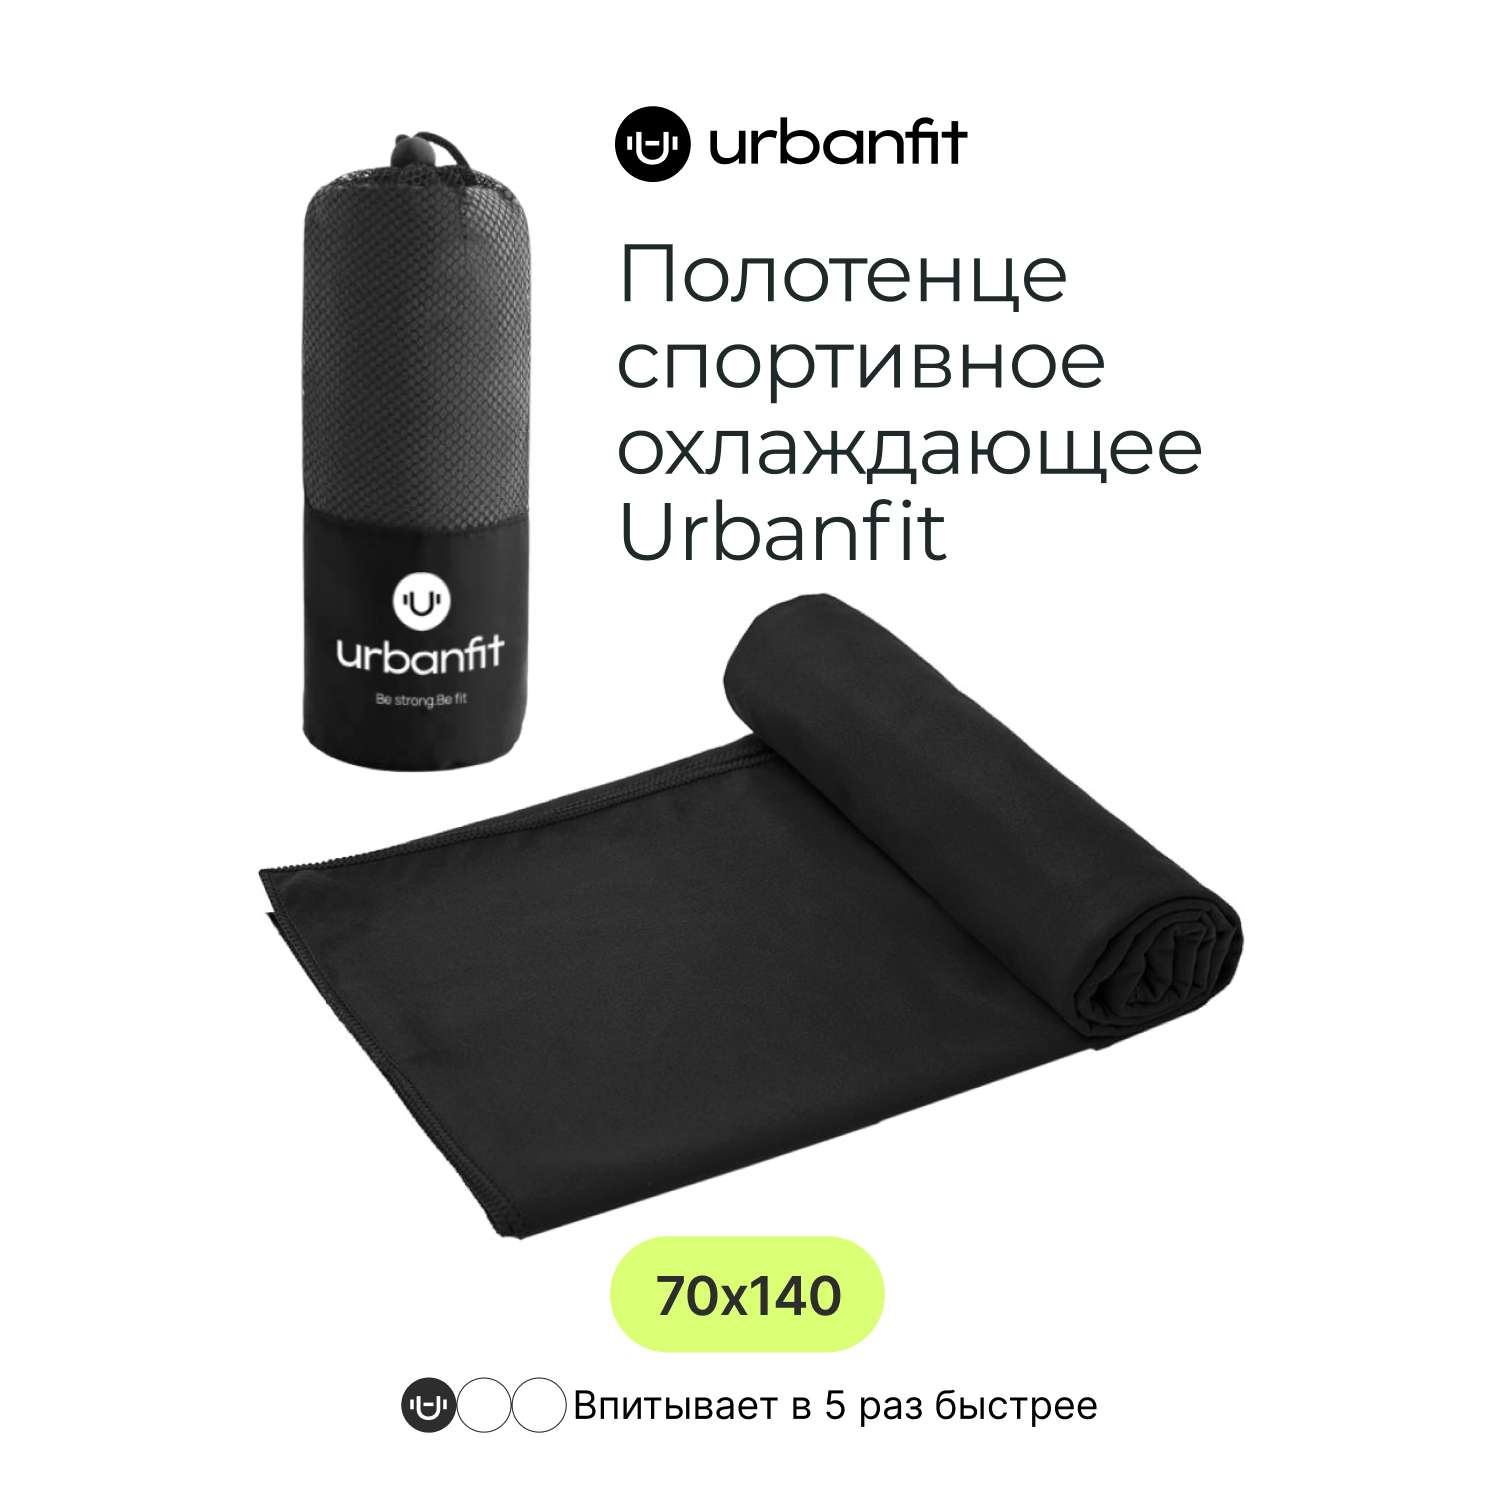 Полотенце спортивное Urbanfit черный размер 70х140 см - фото 2